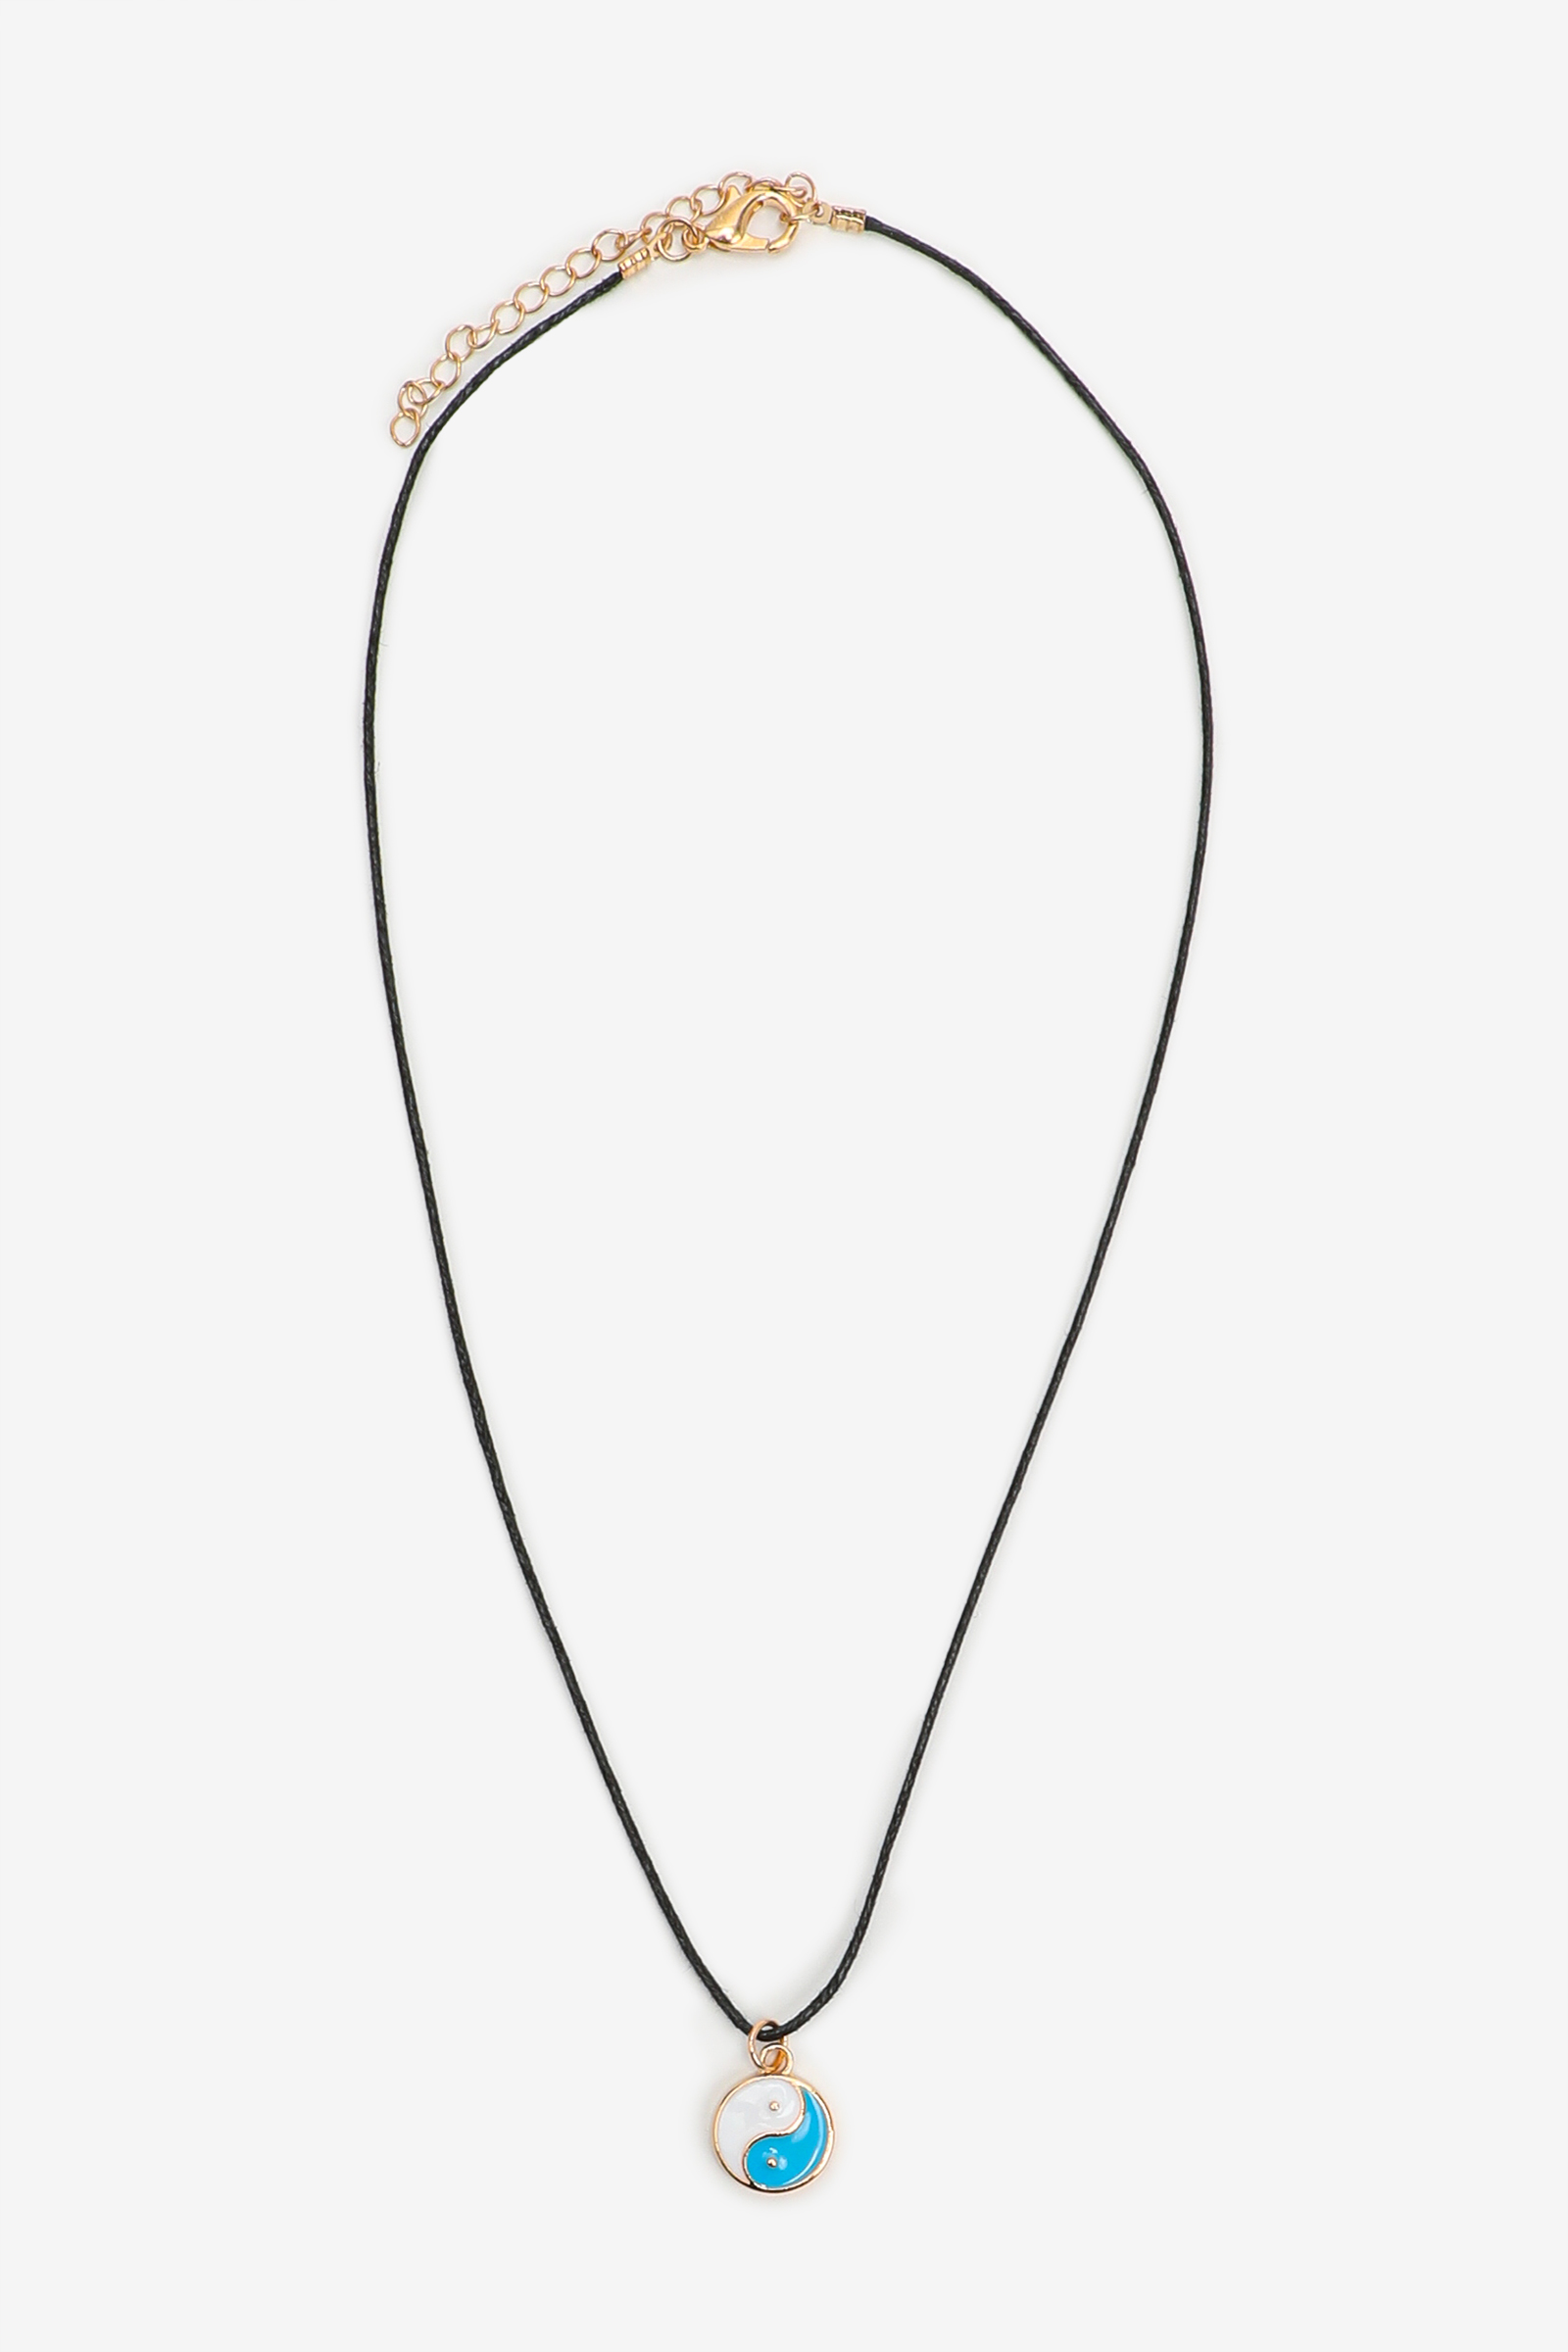 Yin-Yang Cord Necklace